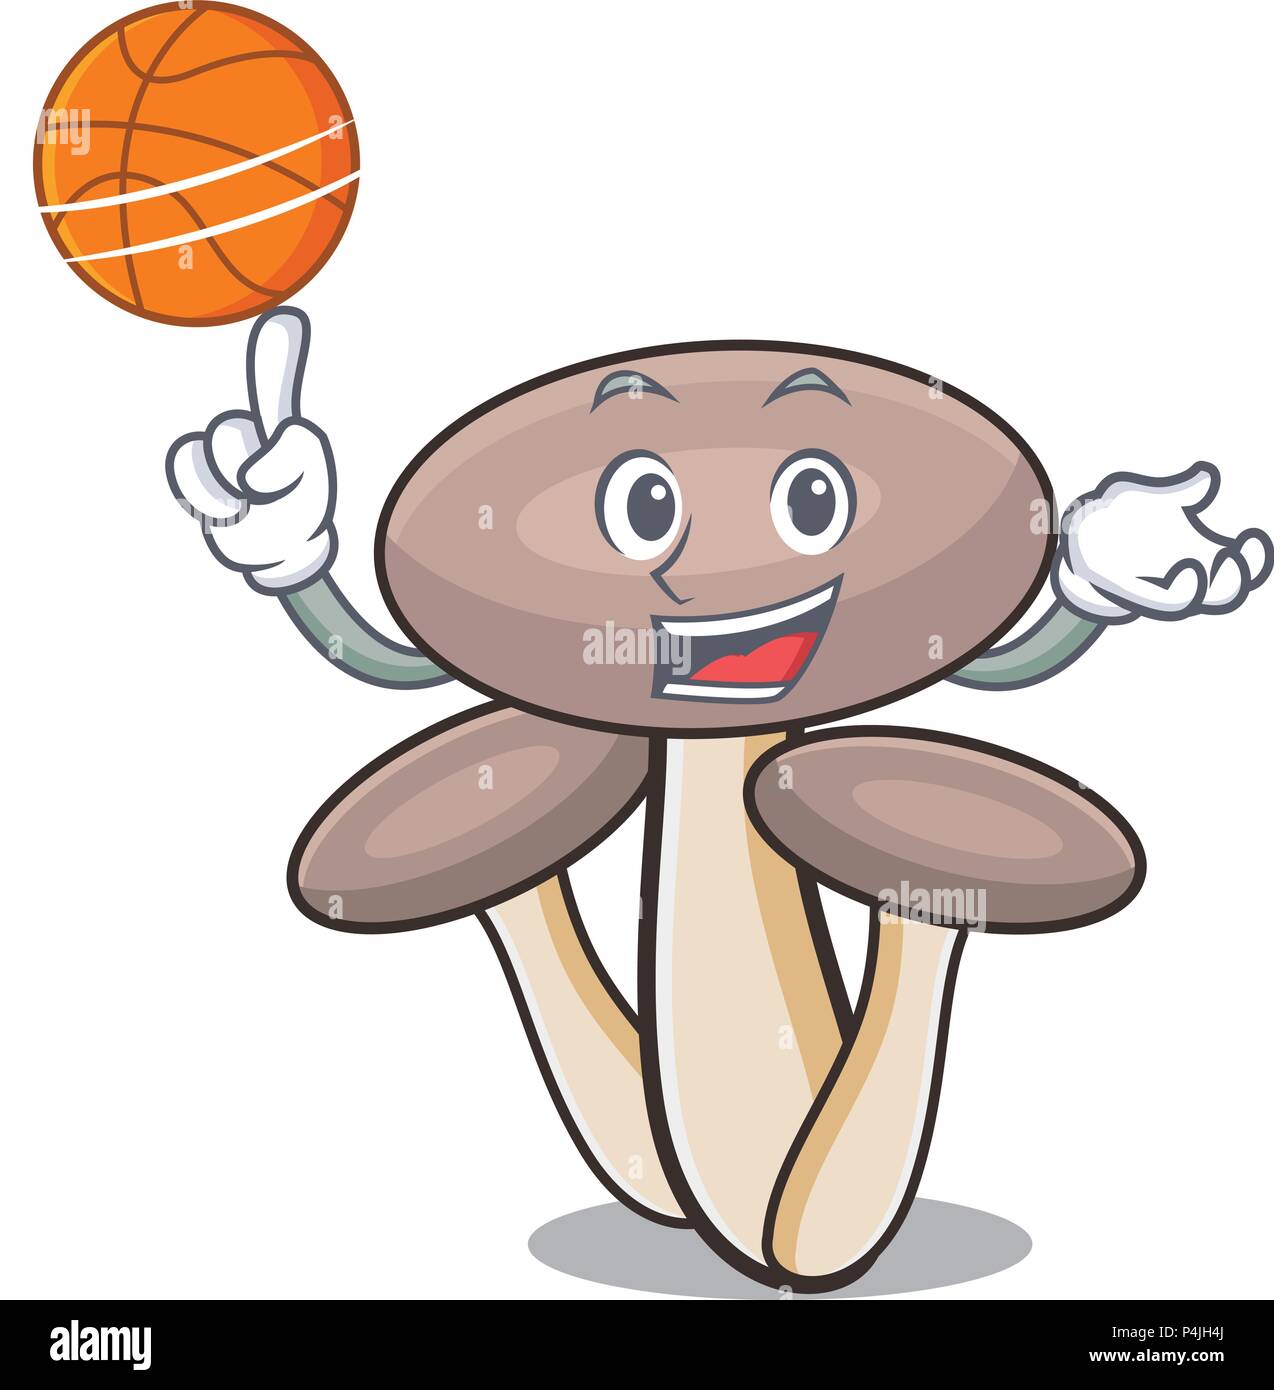 With basketball honey agaric mushroom character cartoon Stock Vector